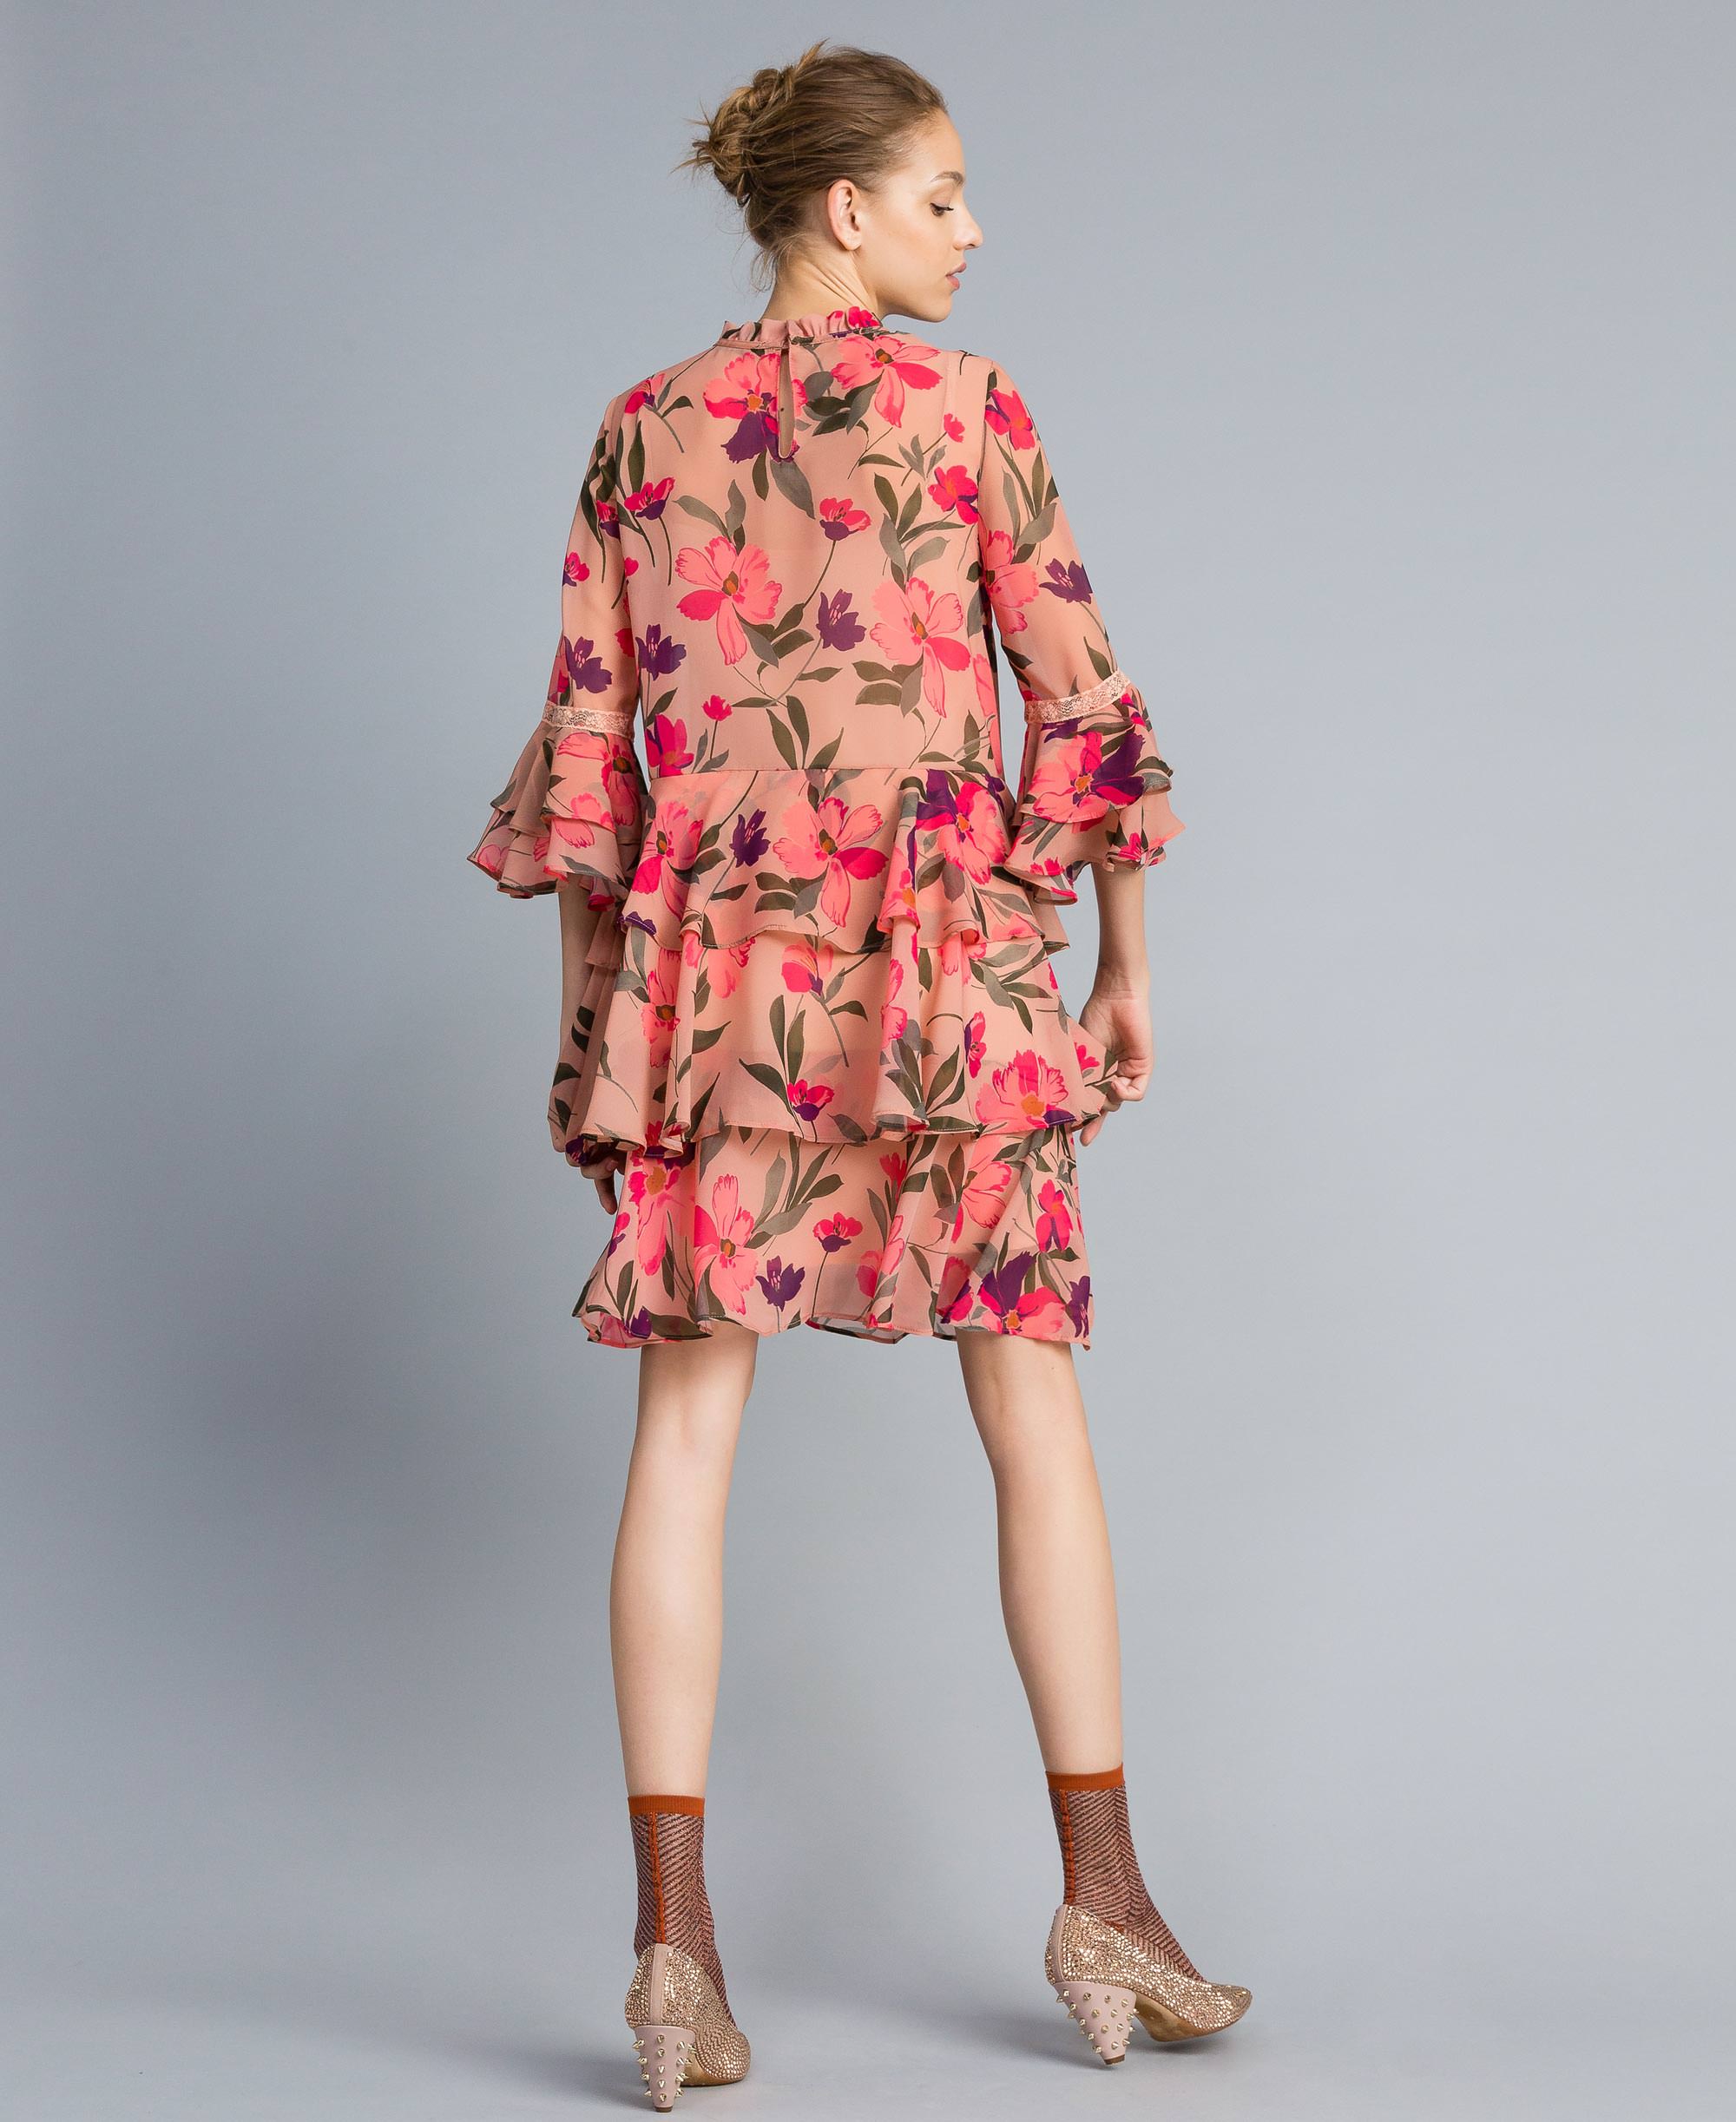 Chiffon dress with floral print